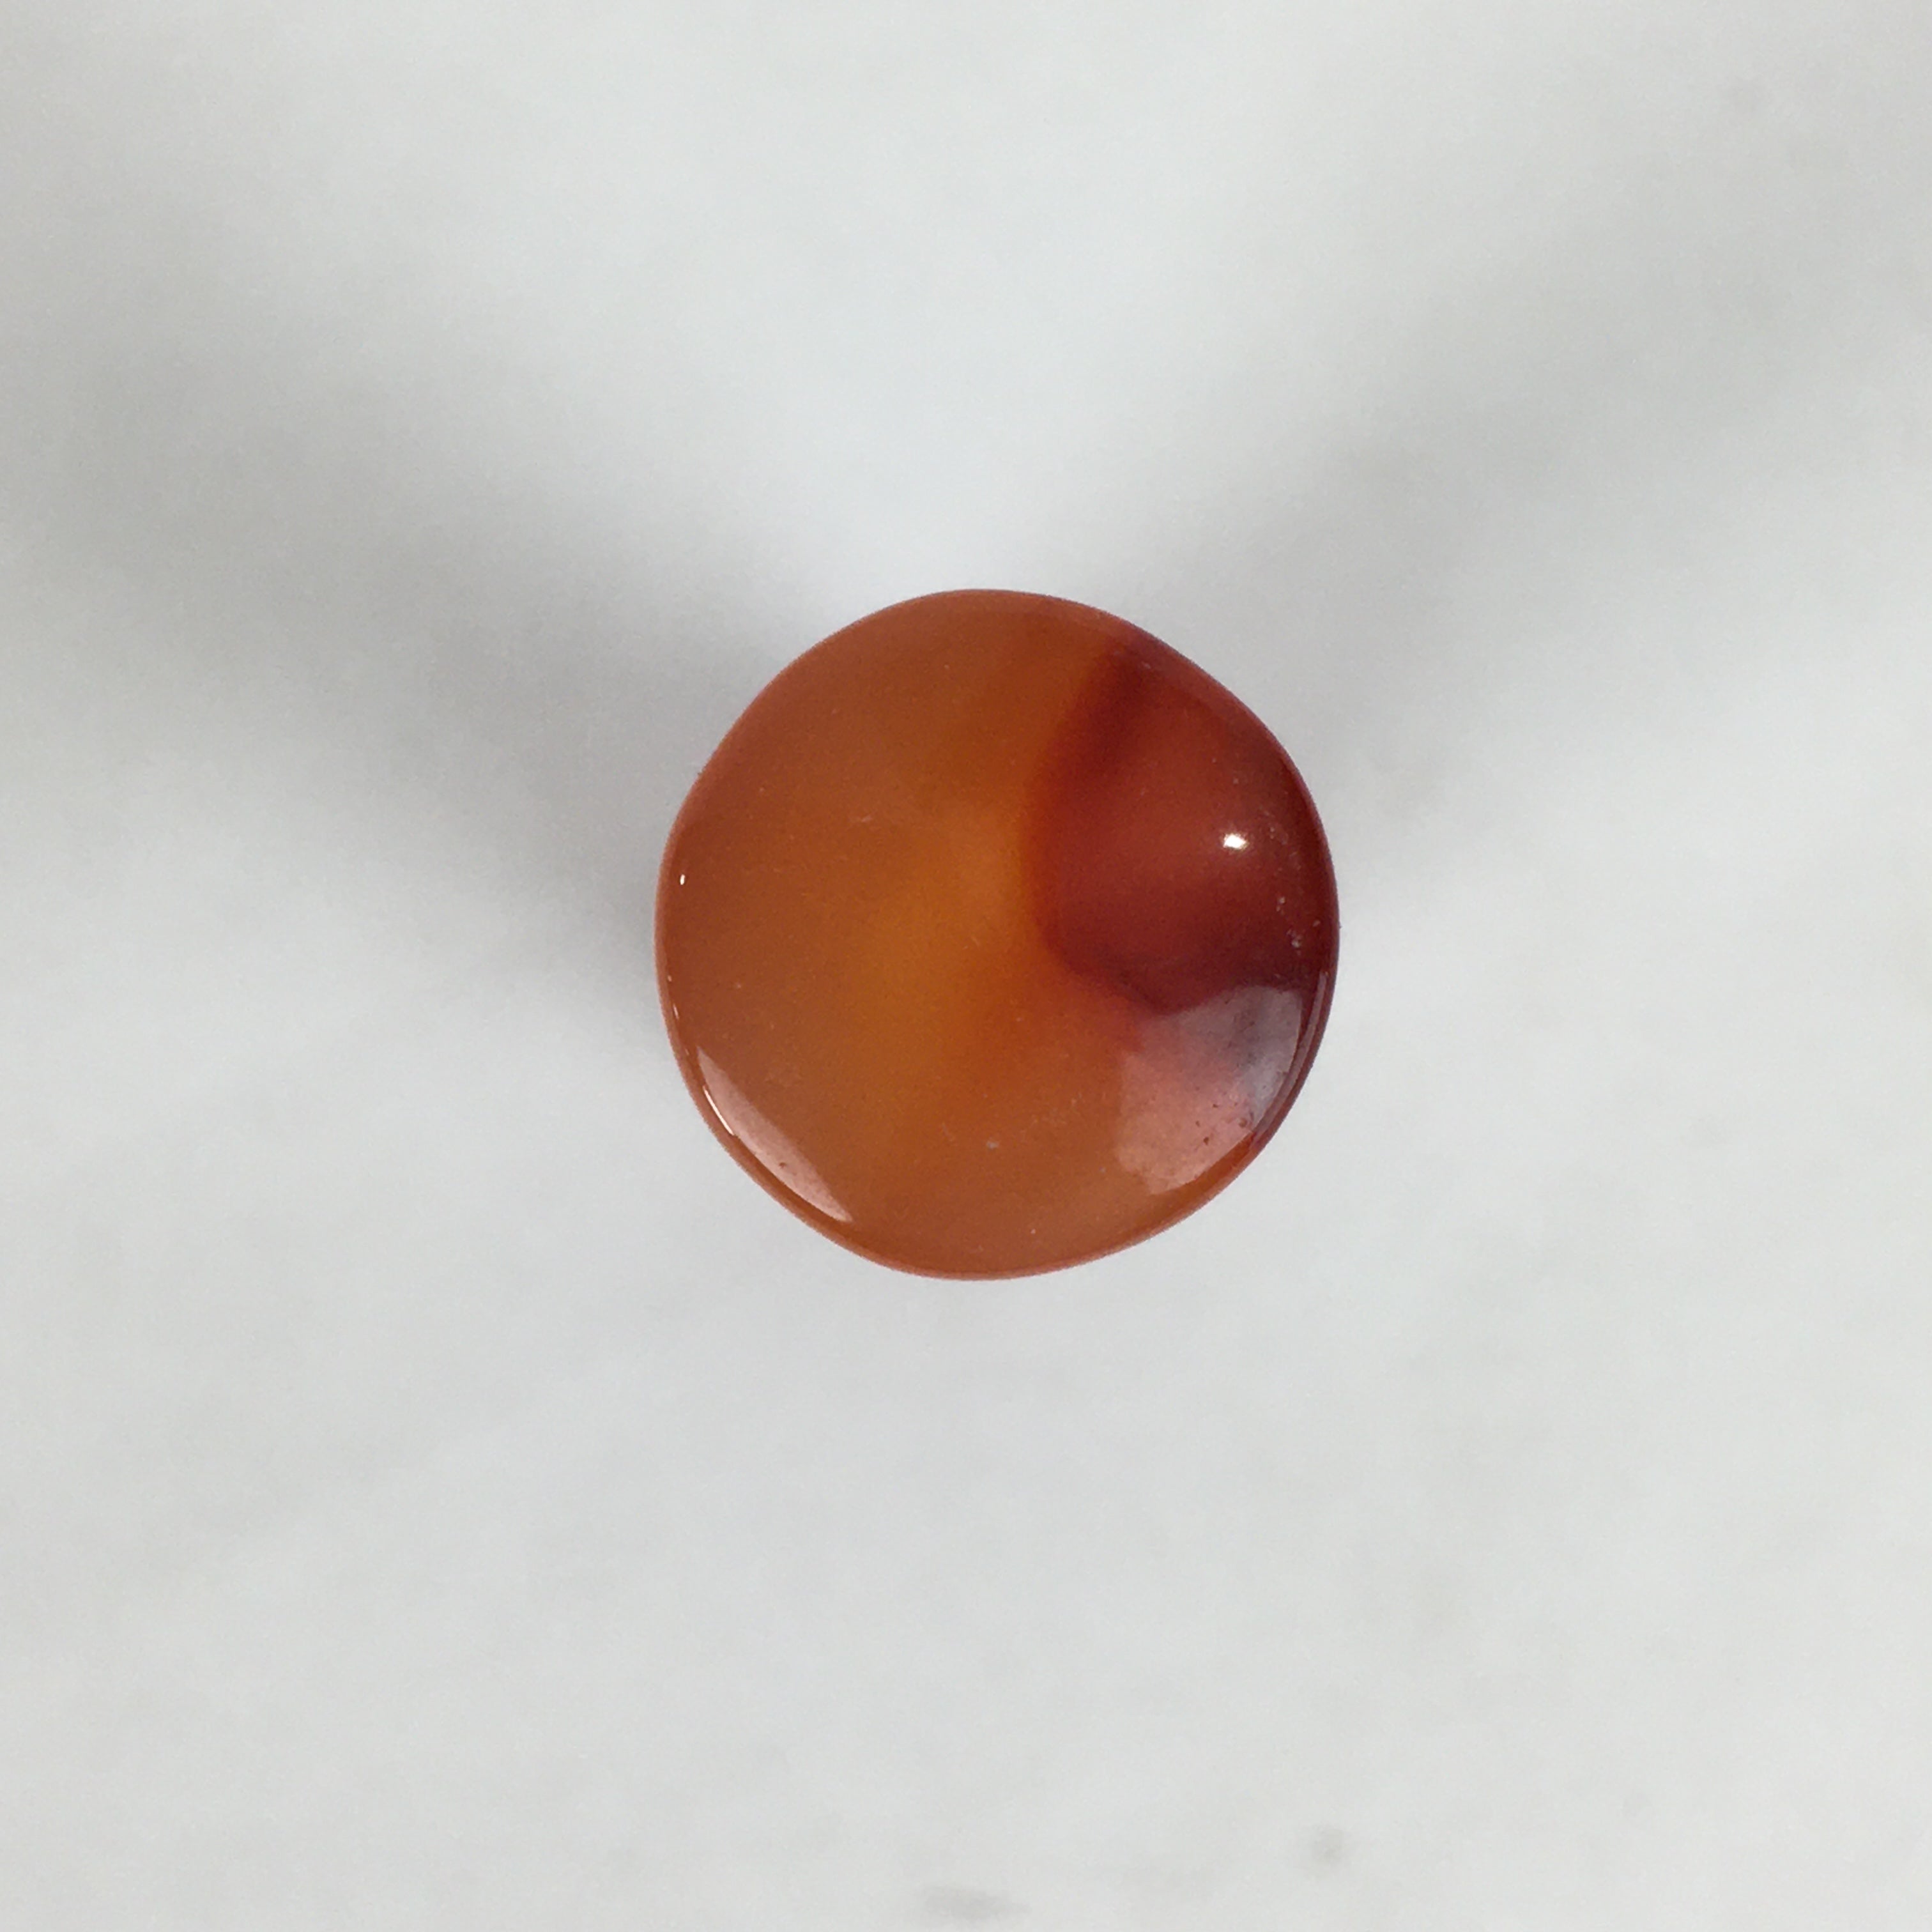 Chinese Boxed Stone Name Stamp Vtg Red Orange Unused Seal Inkan JK299